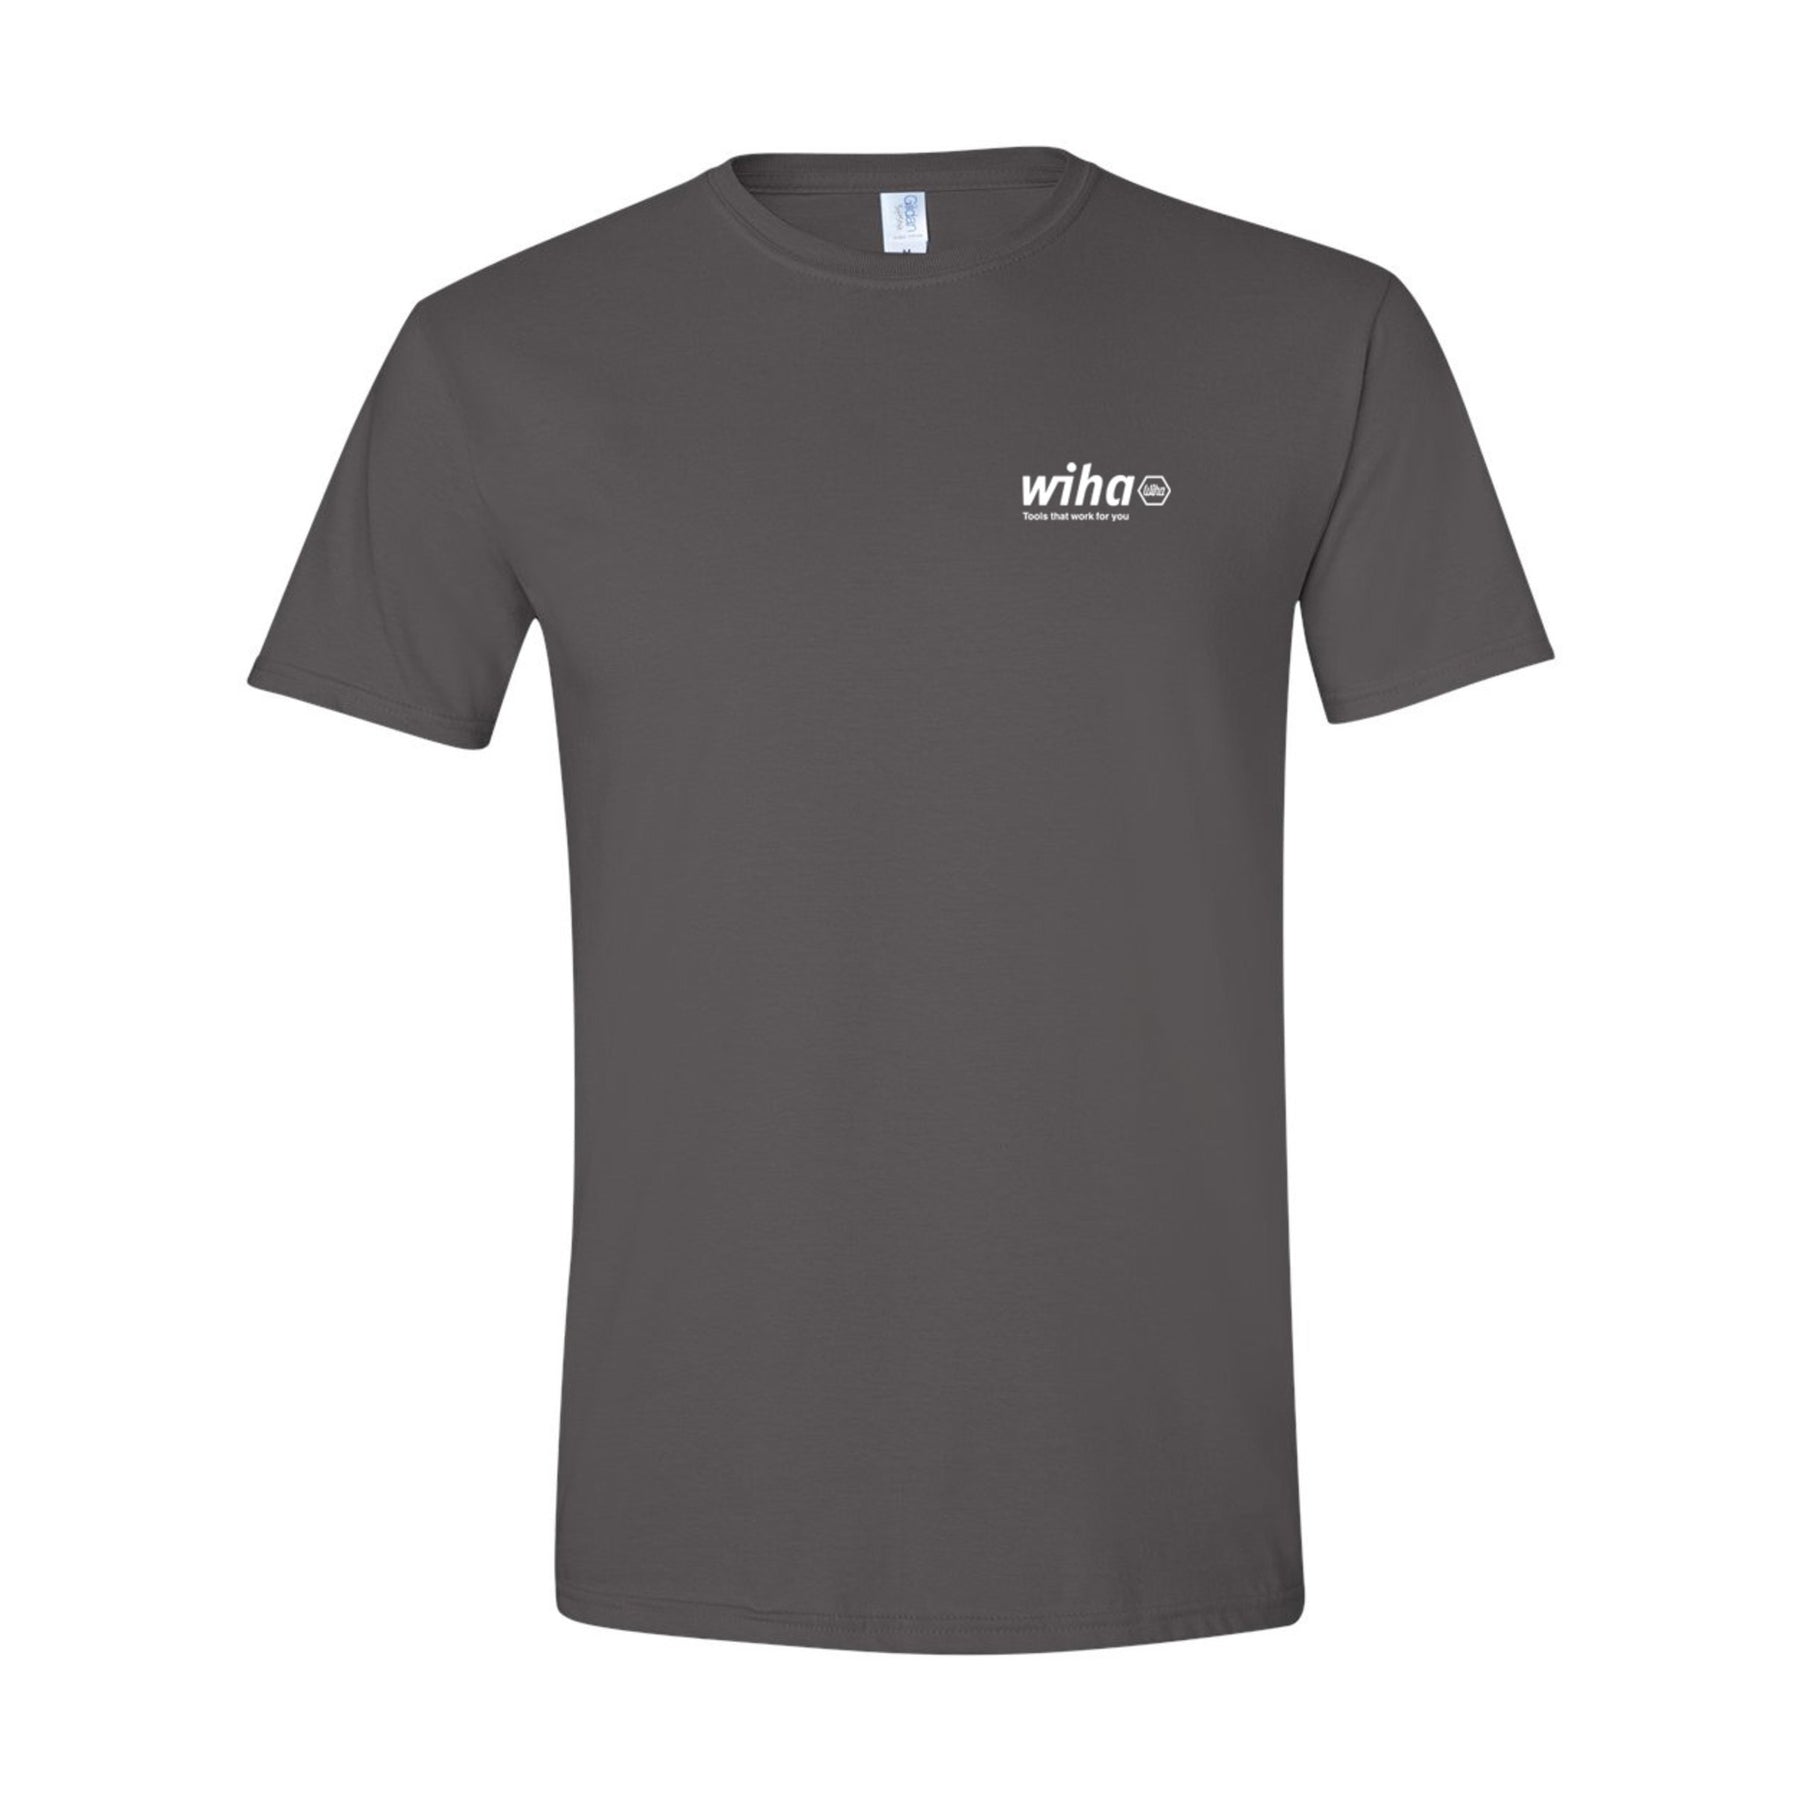 Wiha 91603 Wiha Men's T-Shirt Charcoal Grey XLarge